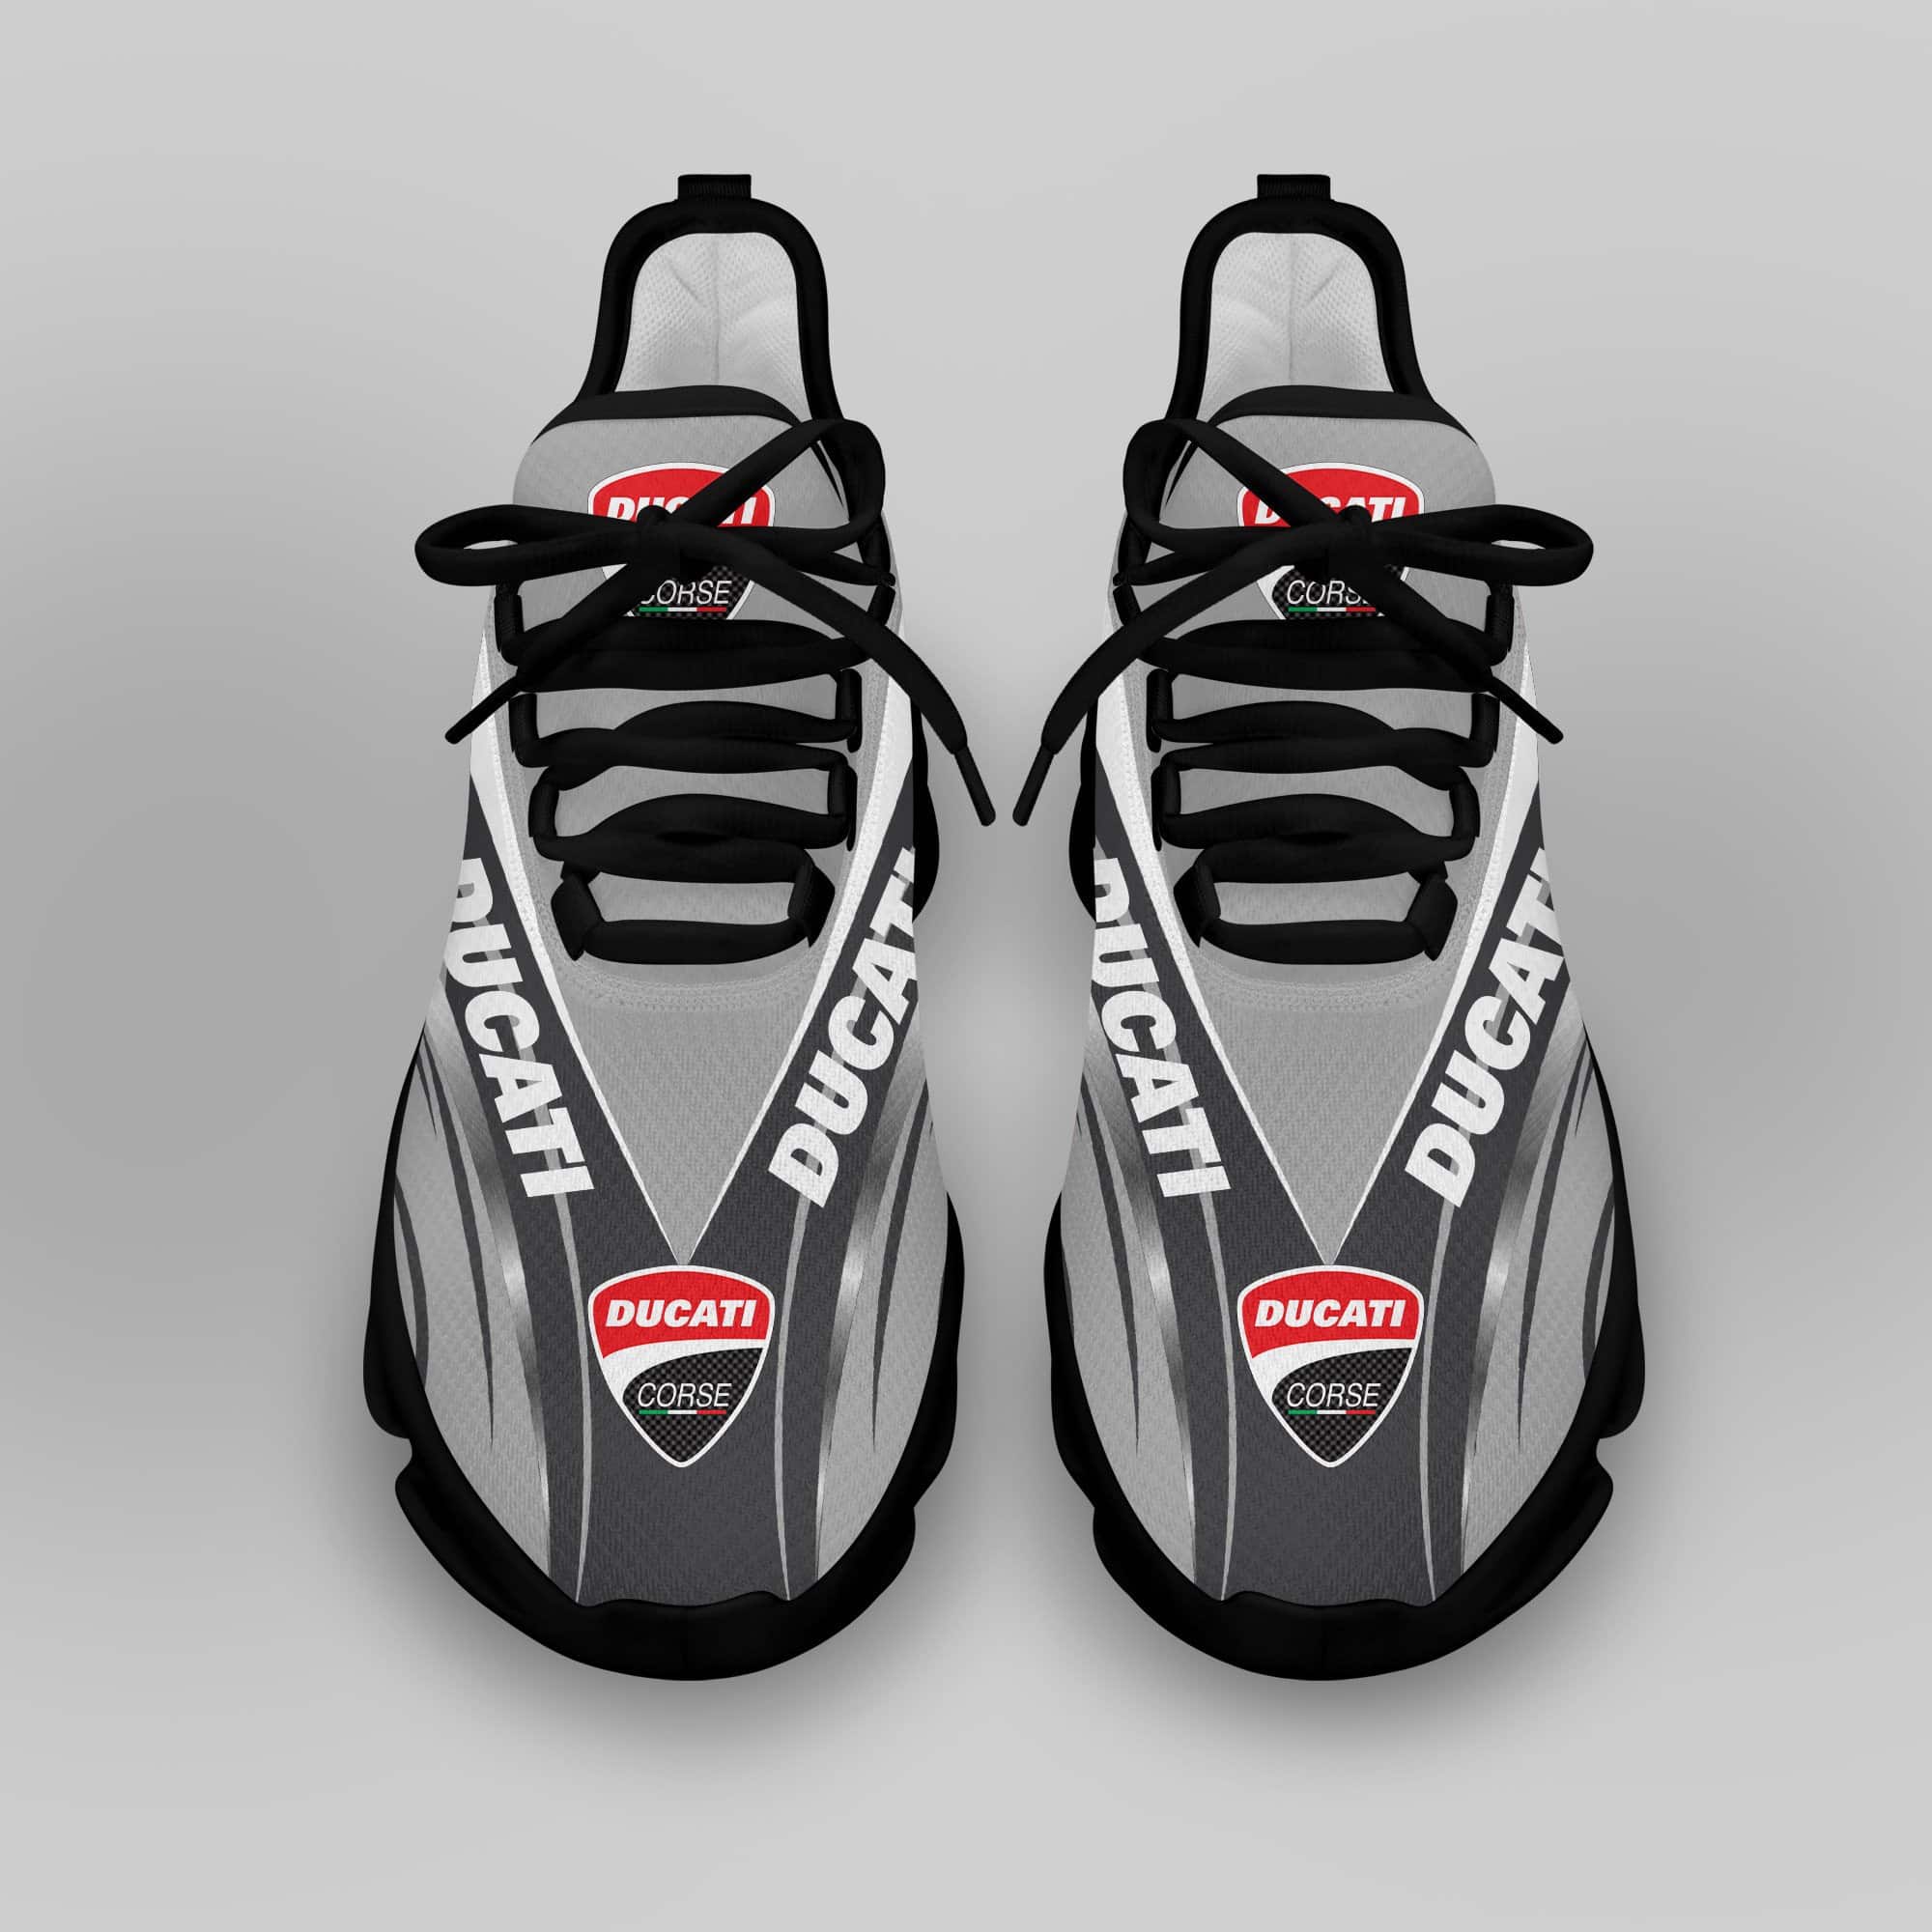 Ducati Racing Running Shoes Max Soul Shoes Sneakers Ver 56 4